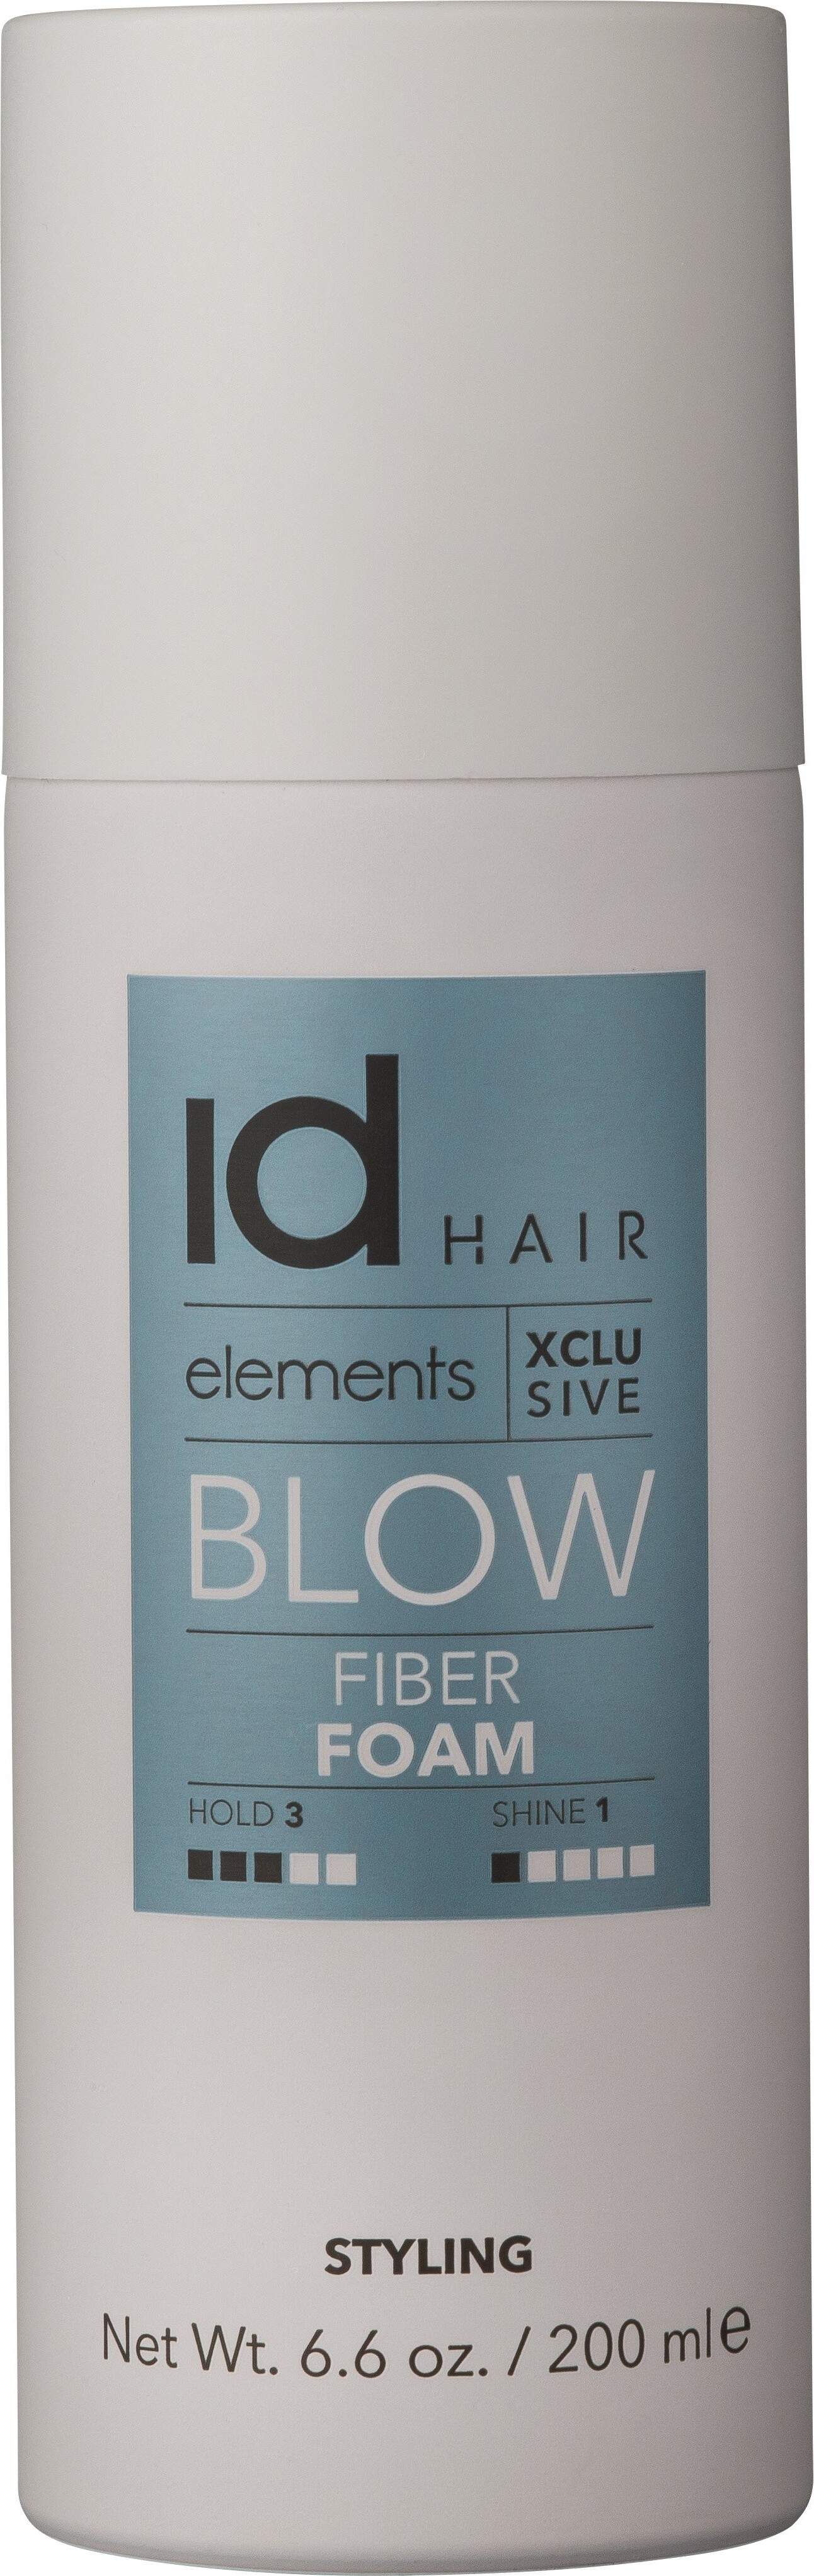 Billede af Id Hair - Elements Xclusive Blow Fiber Foam 200 Ml